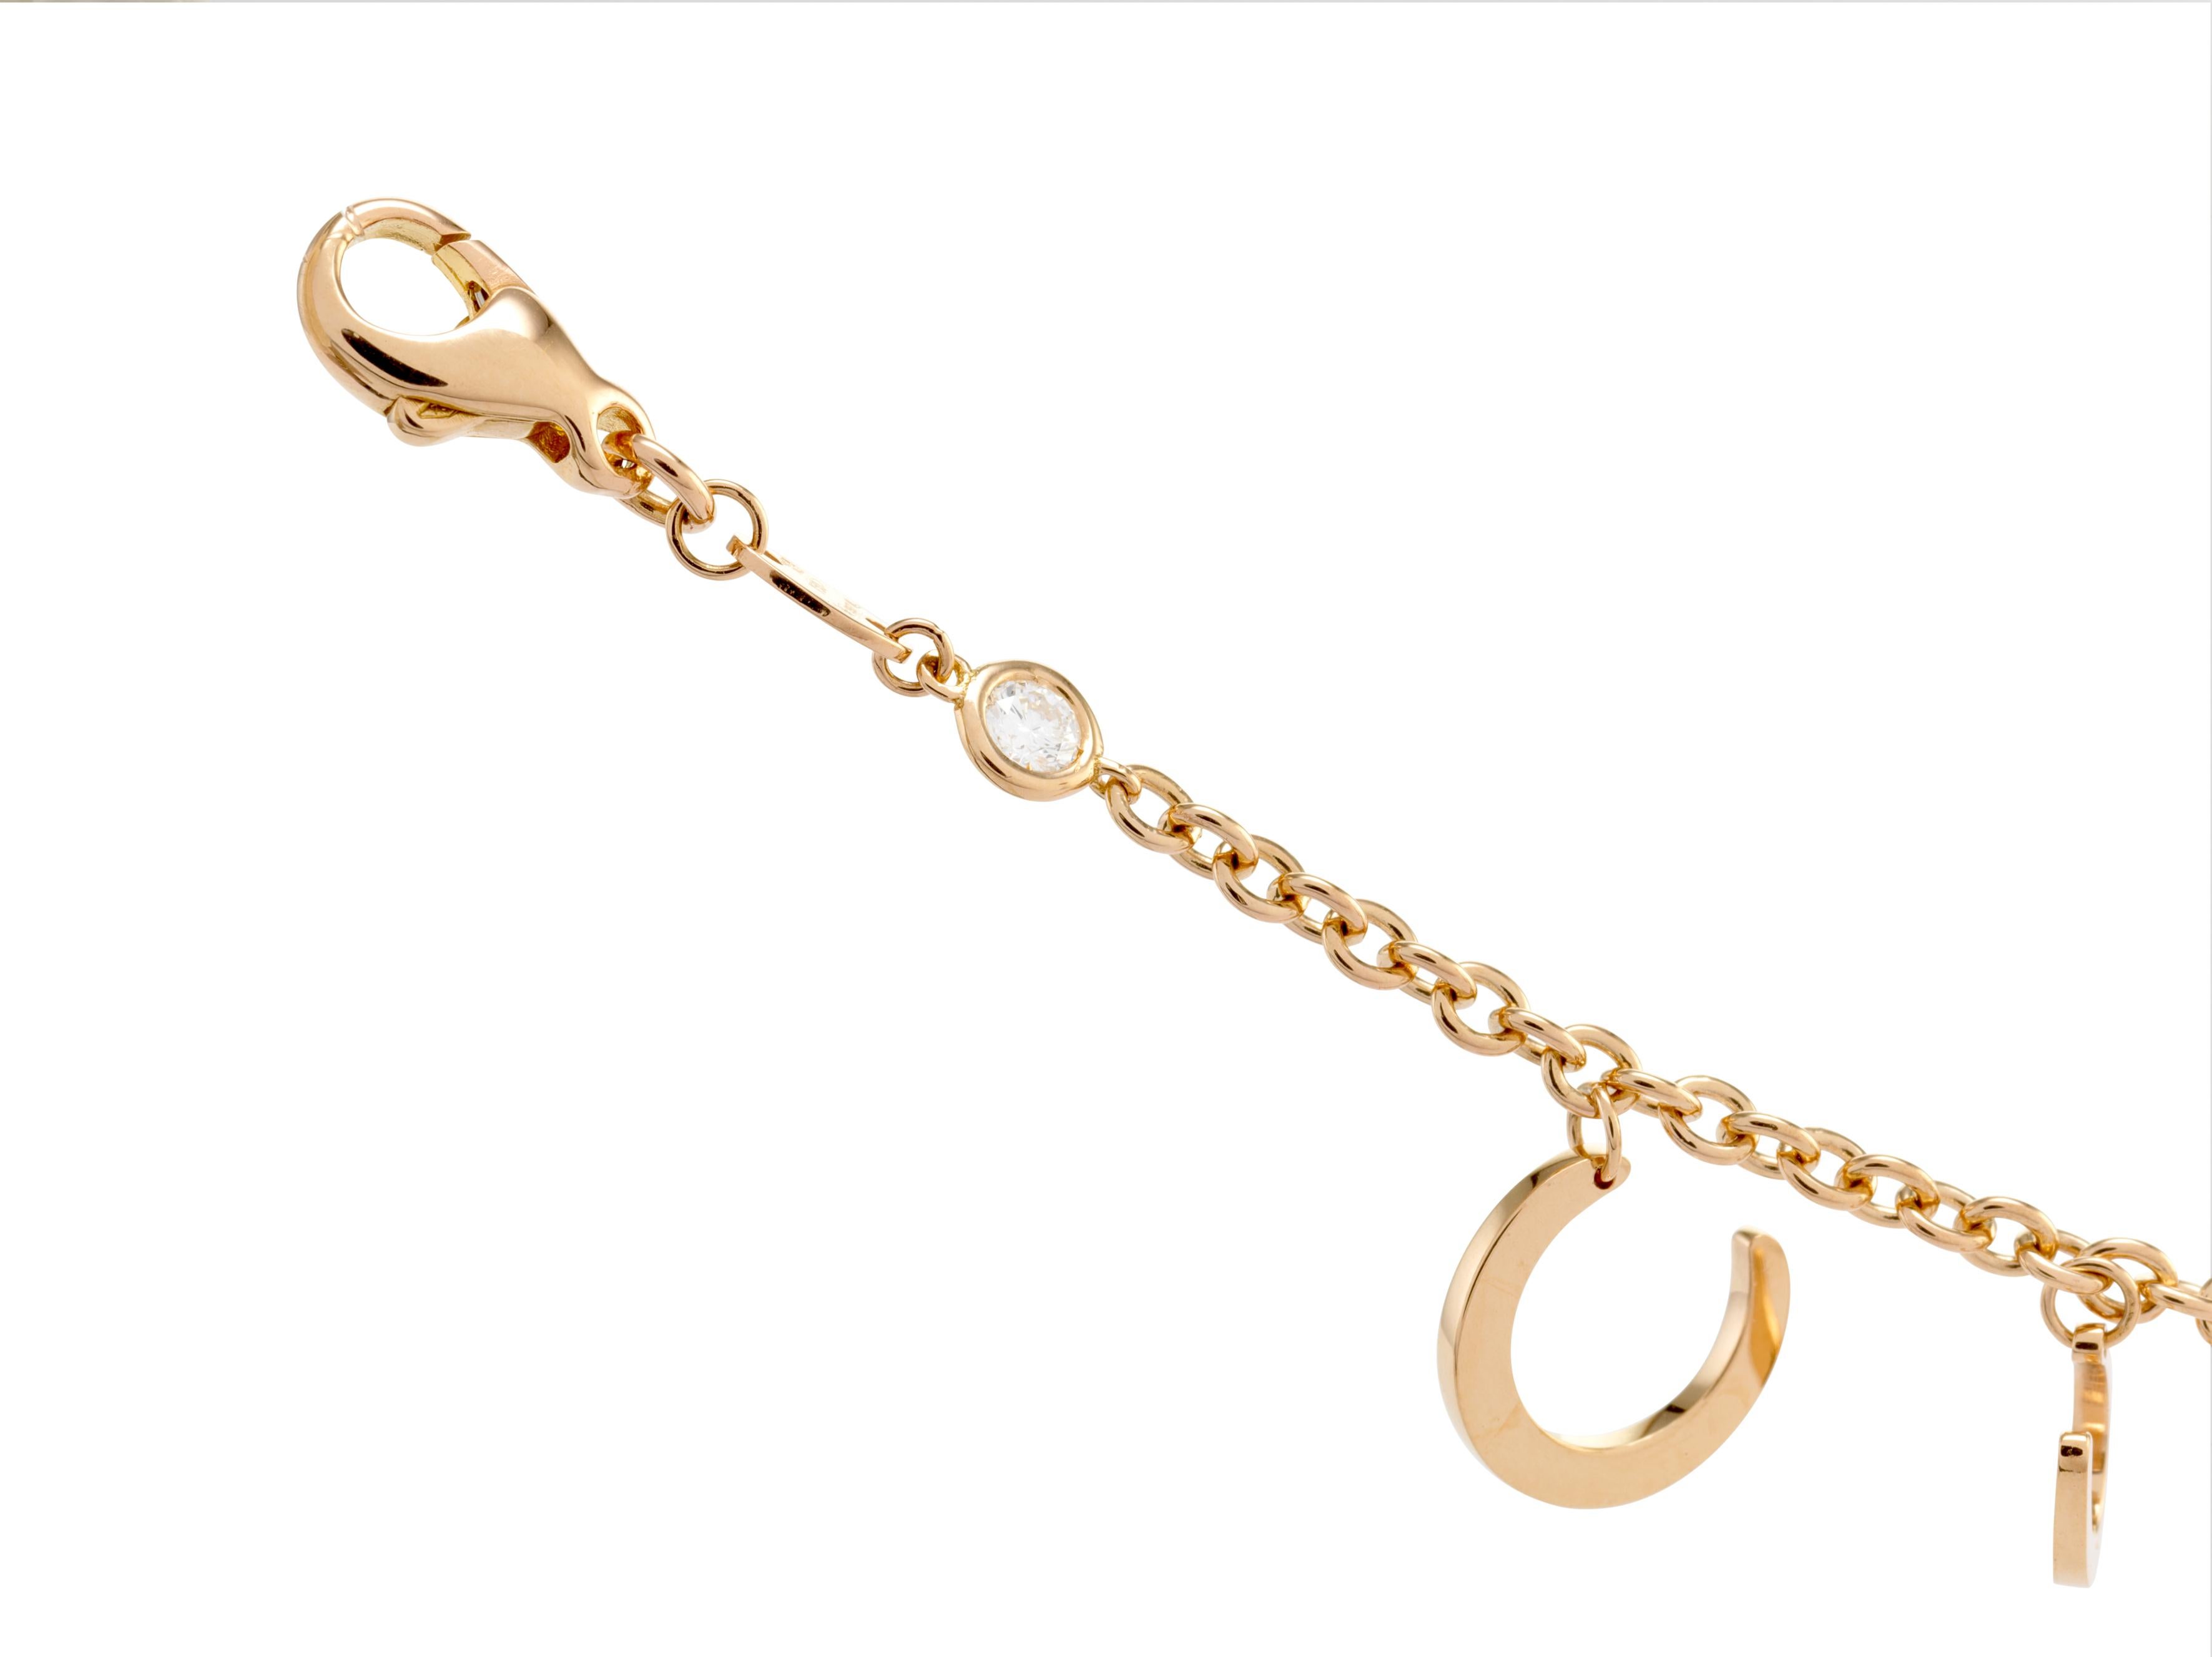 Brilliant Cut Ubaldi Gioielli 18 Karat Gold Bracelet Horseshoes Charm Pendants with 2 Diamonds For Sale